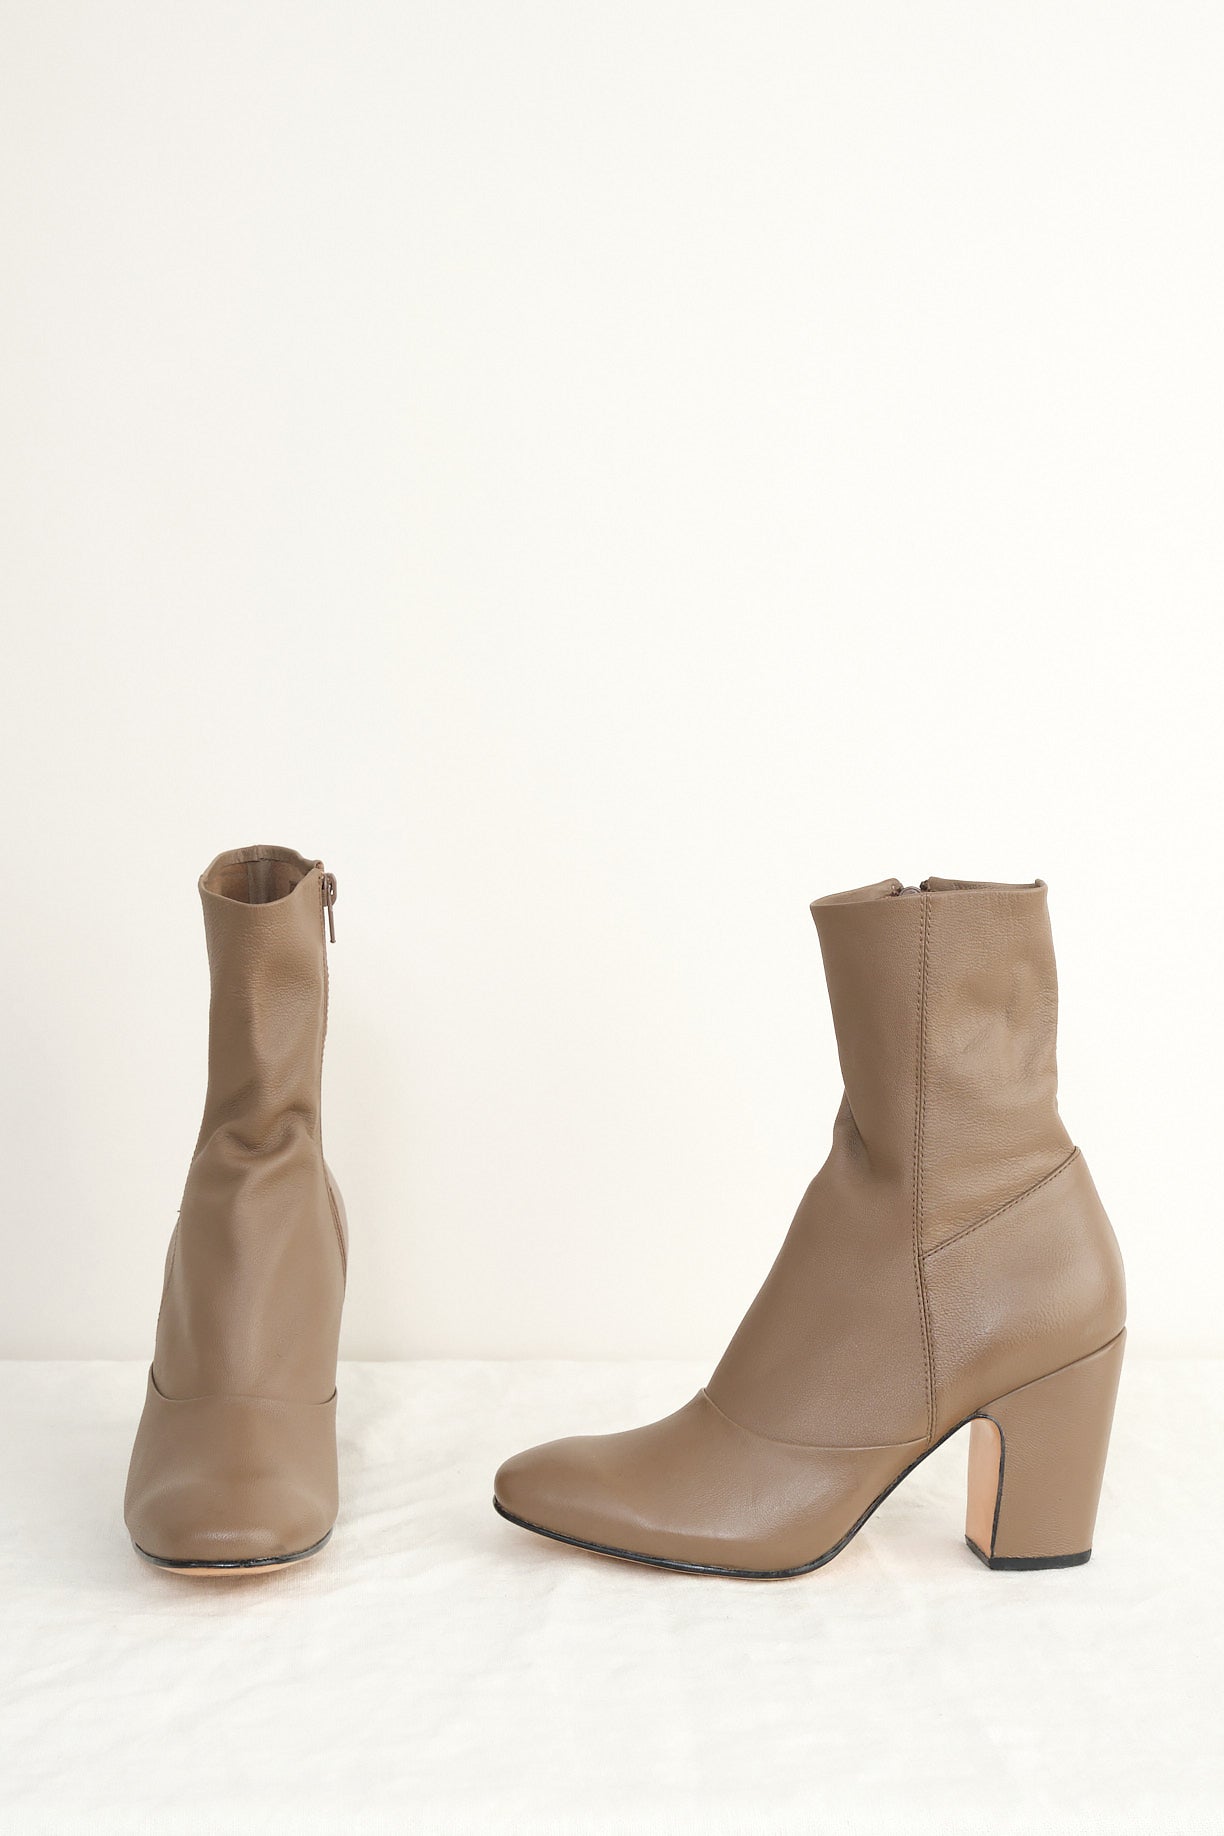 Rachel Comey boots